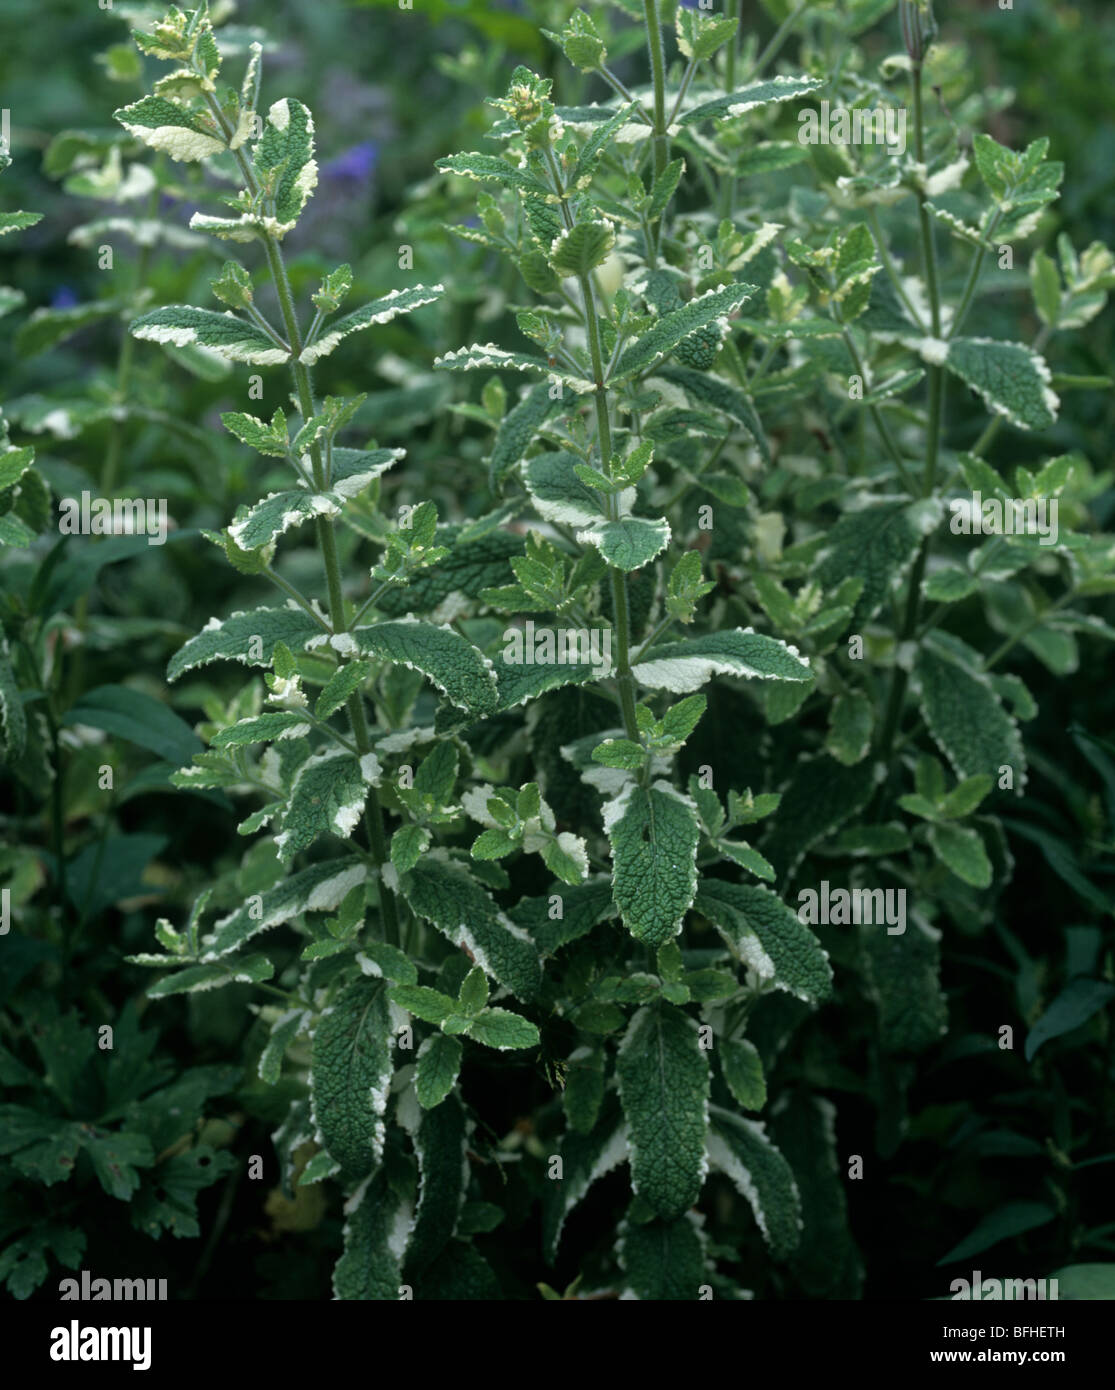 Pineapple mint (Mentha suaveolens) kitchen herb plant Stock Photo